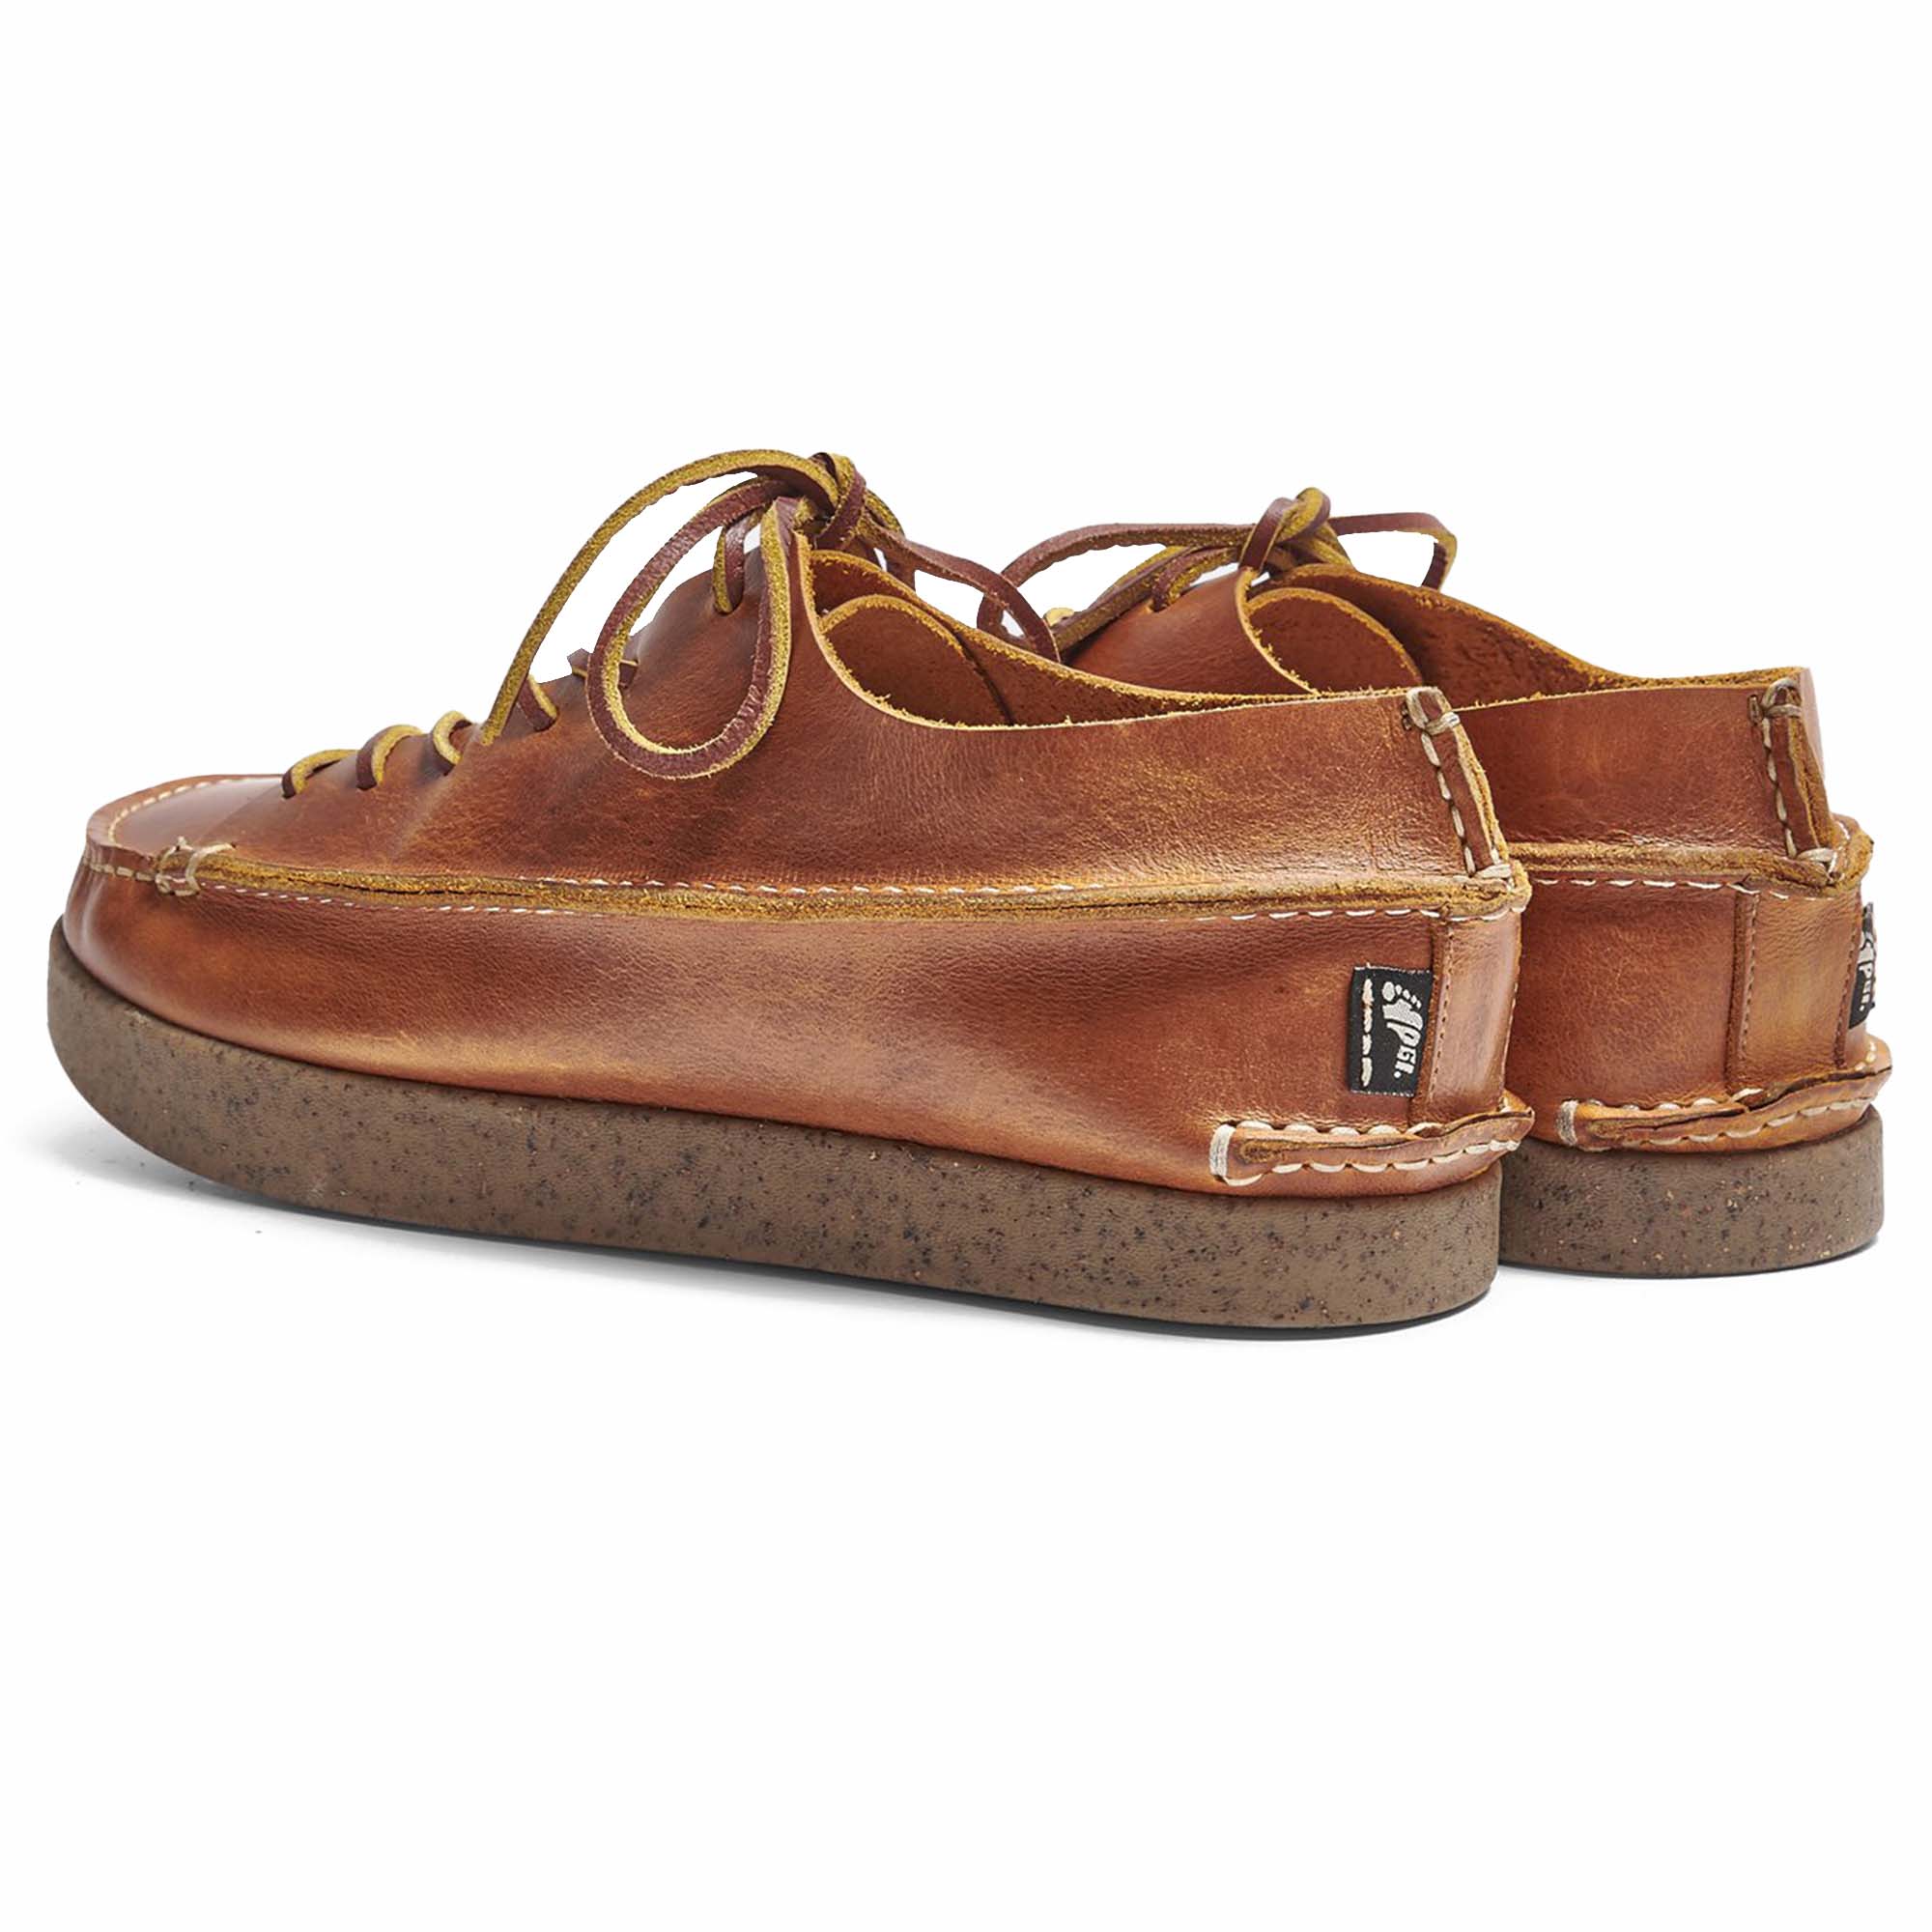 Yogi Finn Recycled Negative Heel Shoe - Apricot Leather